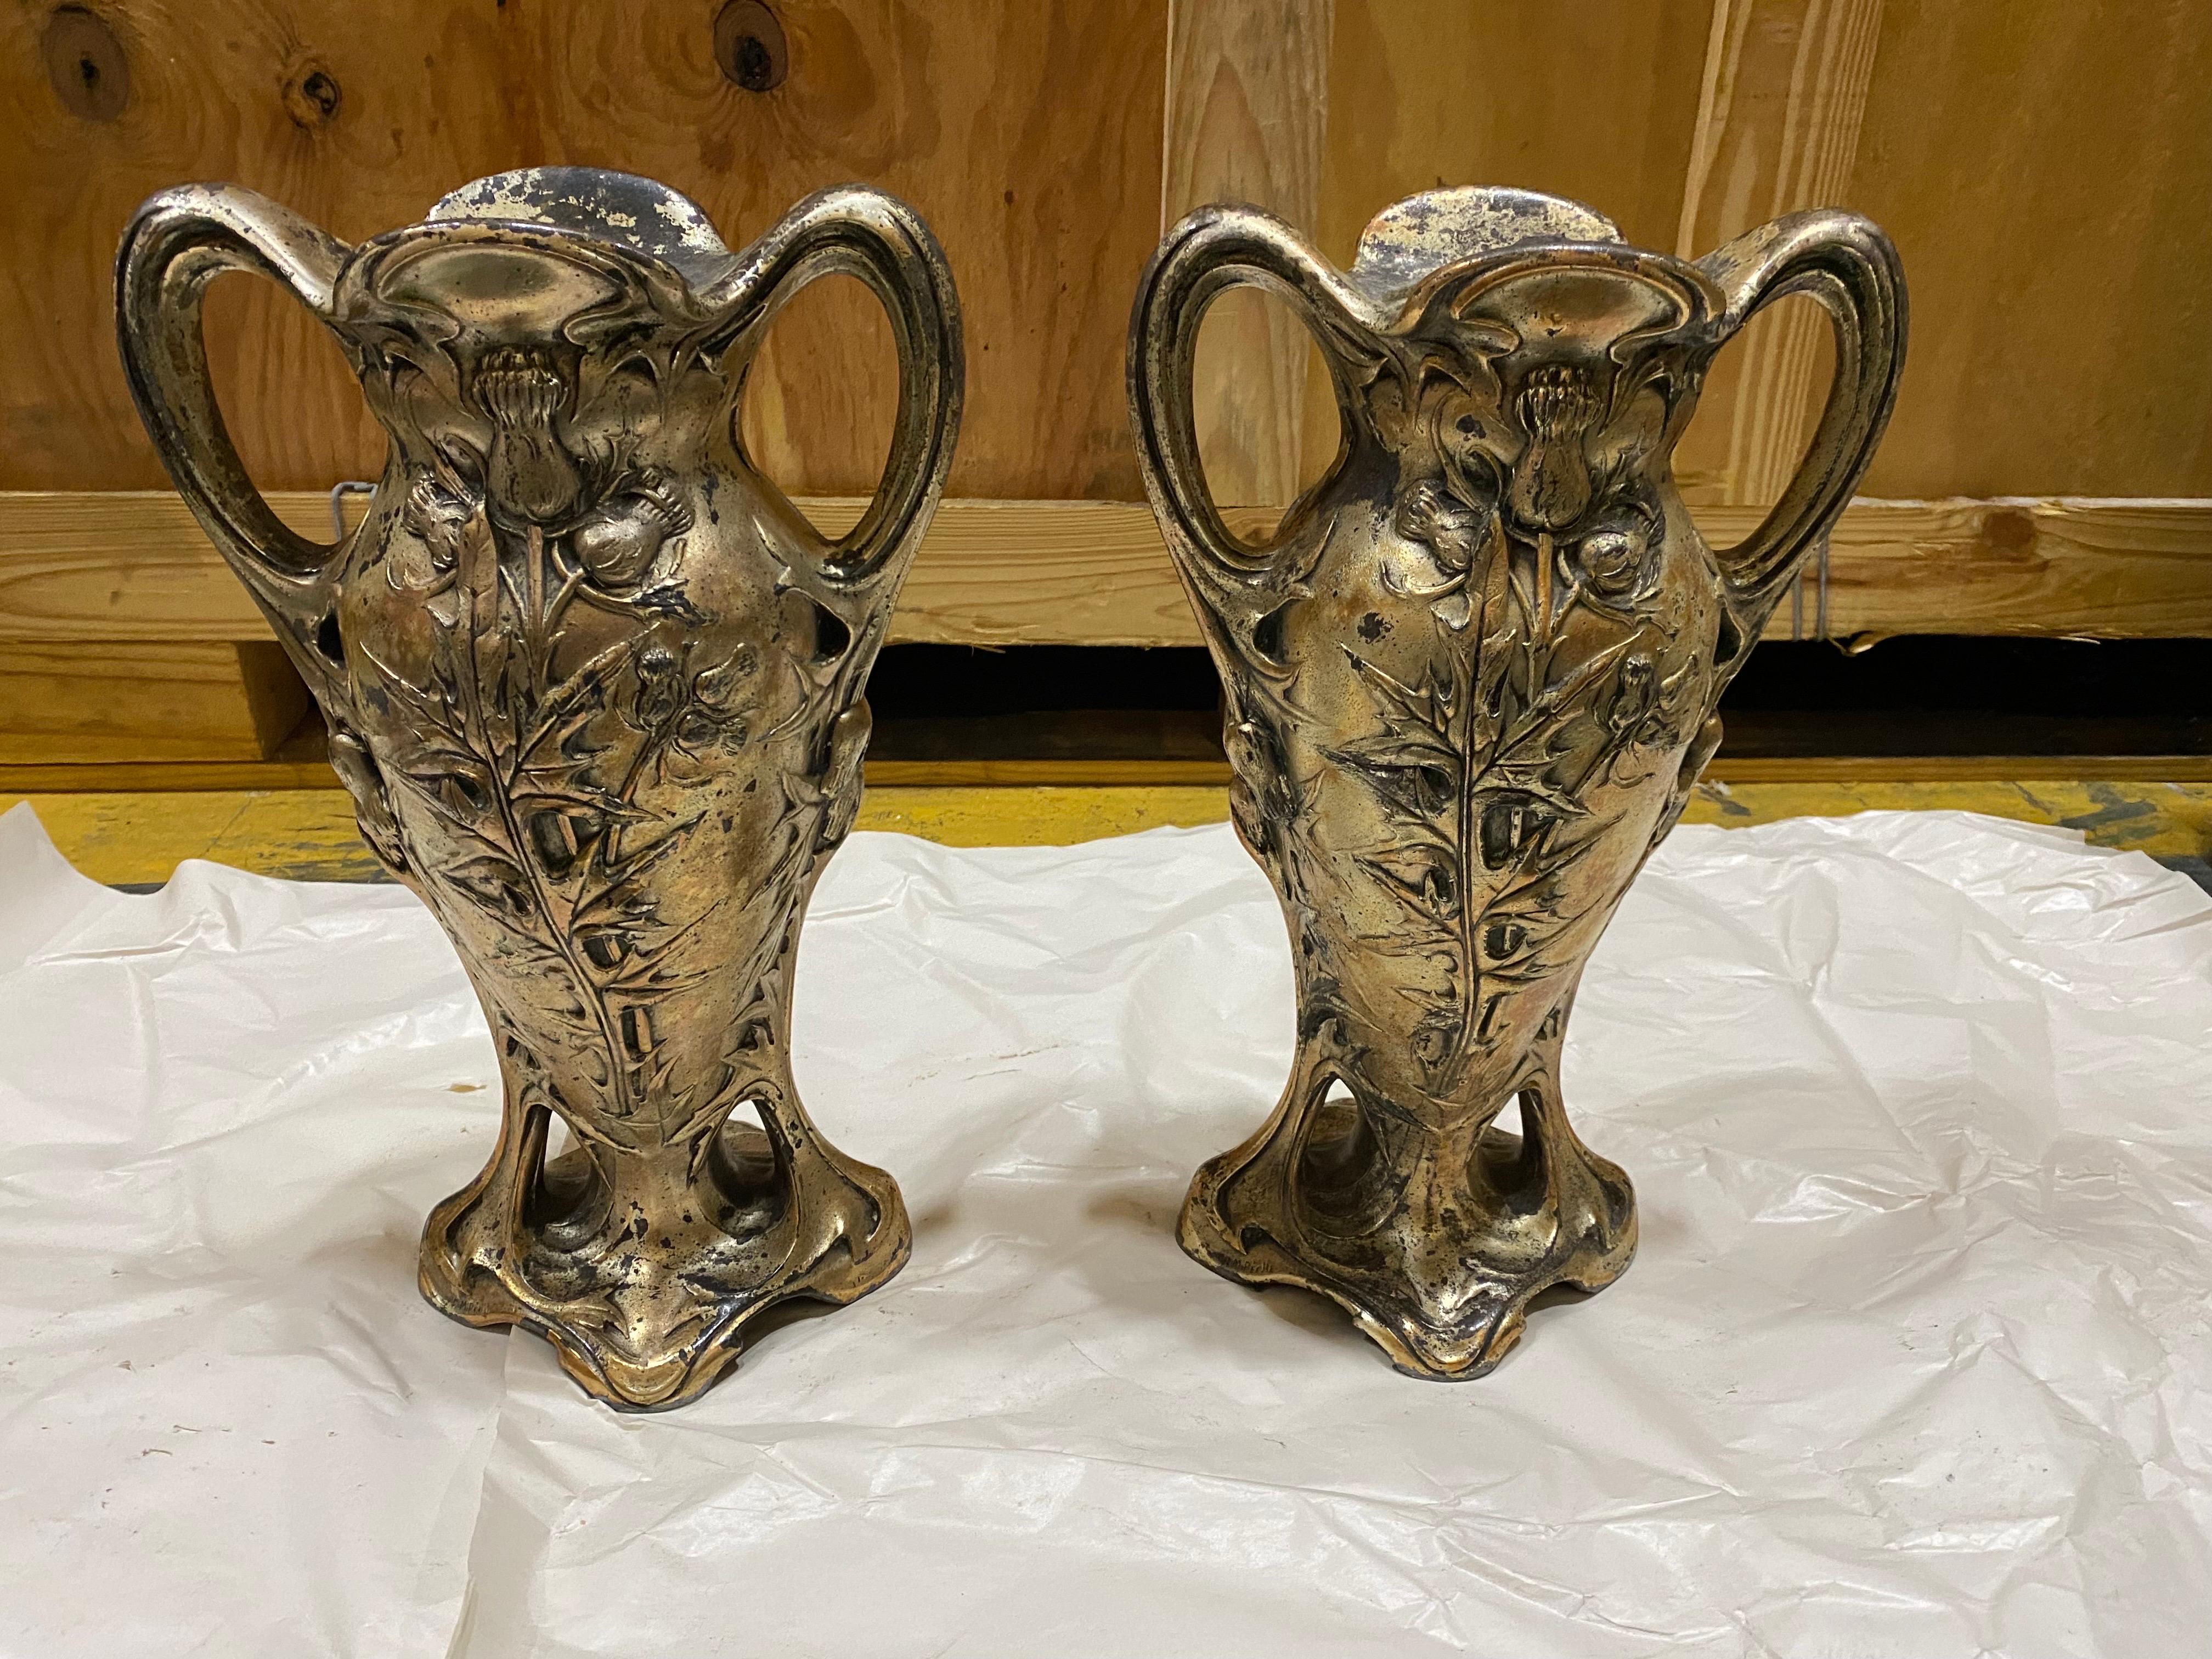 German Pair of Art Nouveau Vases Iron Forged, by Dagobert Peche